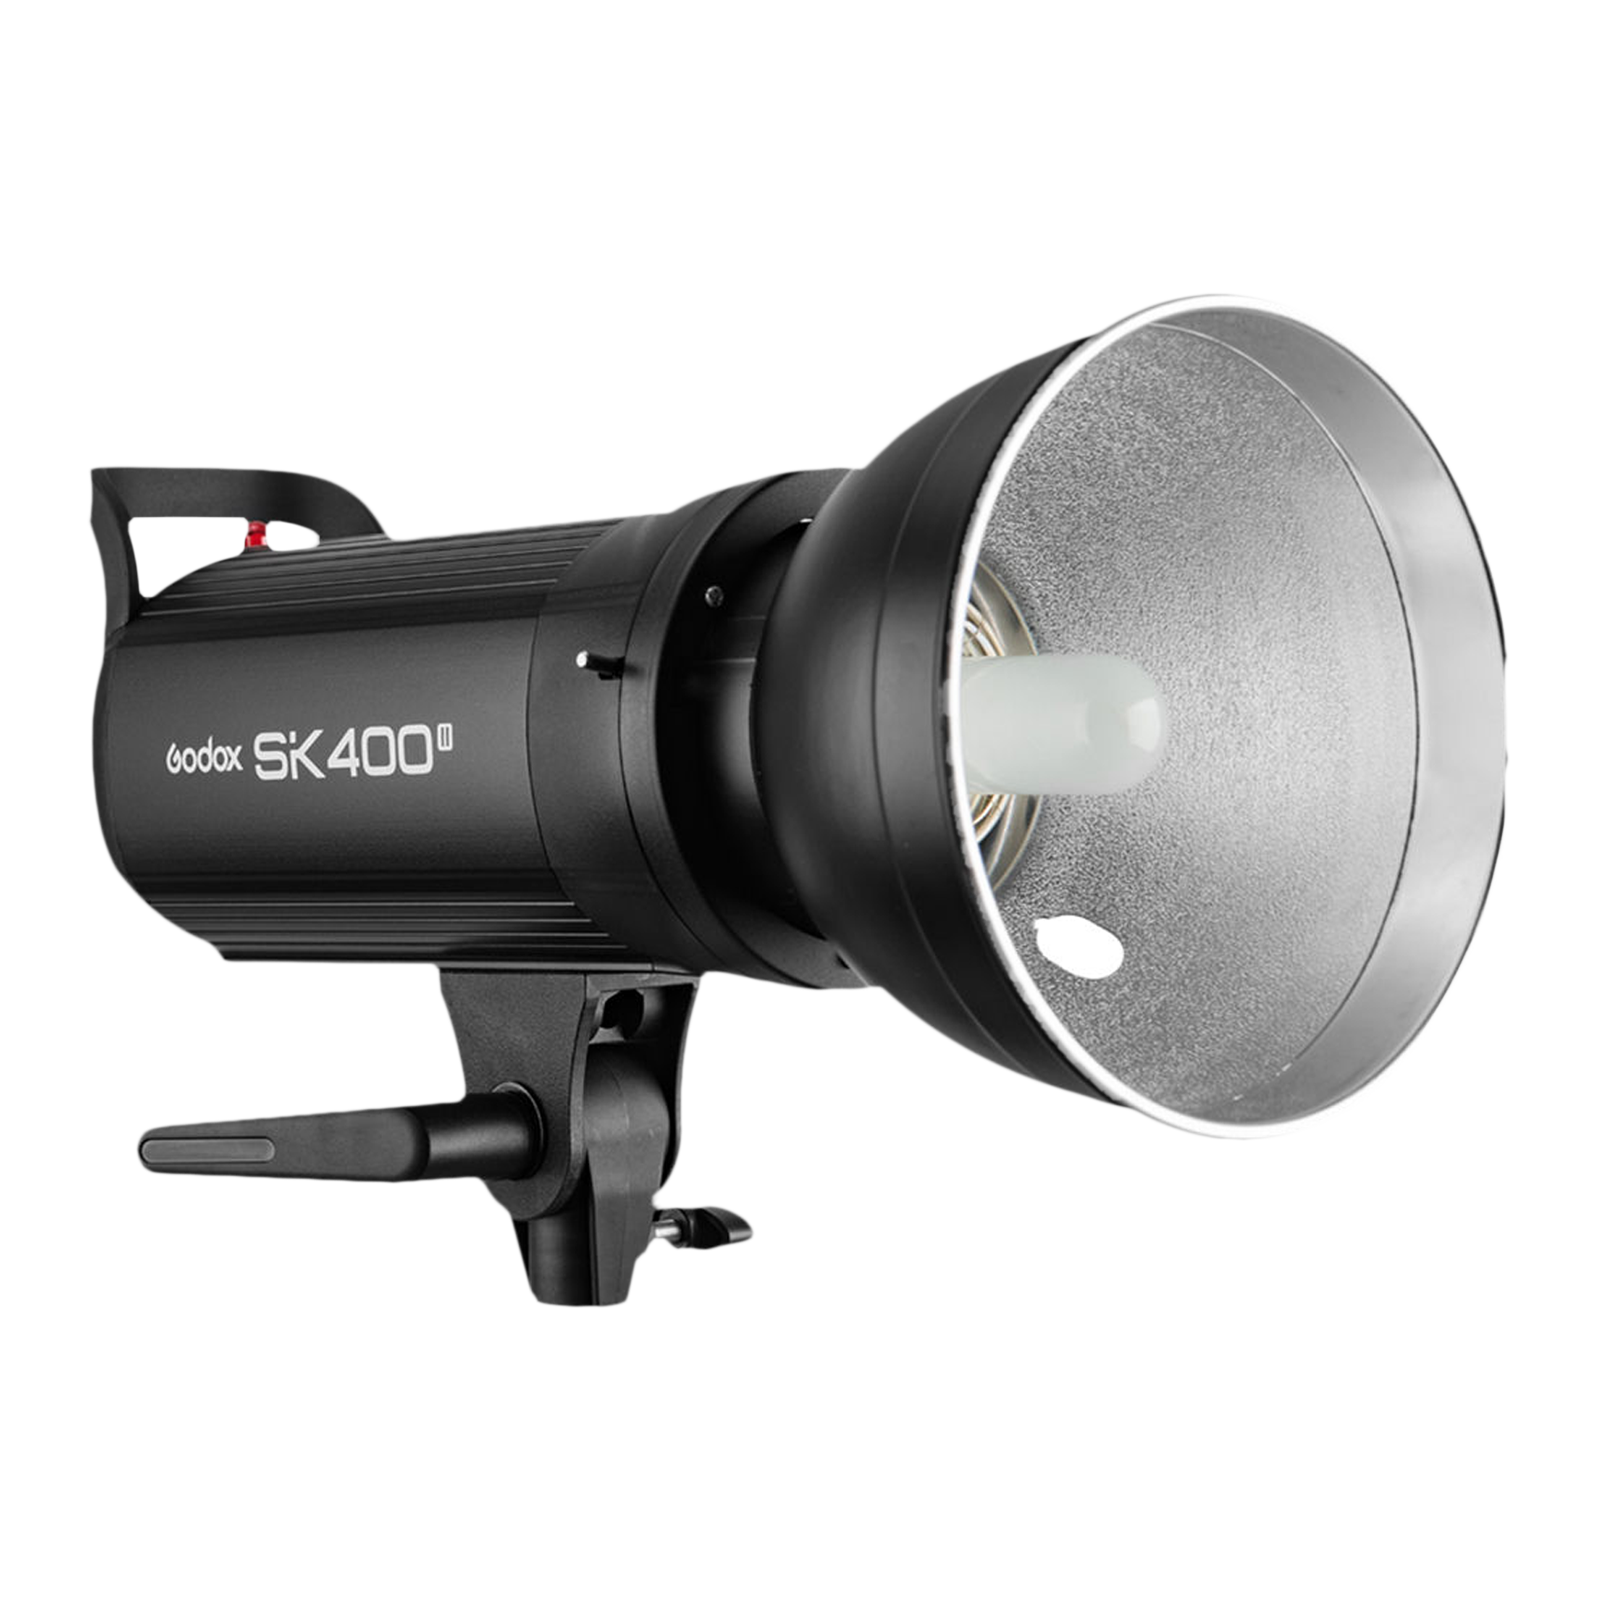 Godox SK400II Flash Light (2.4G Wireless X System)